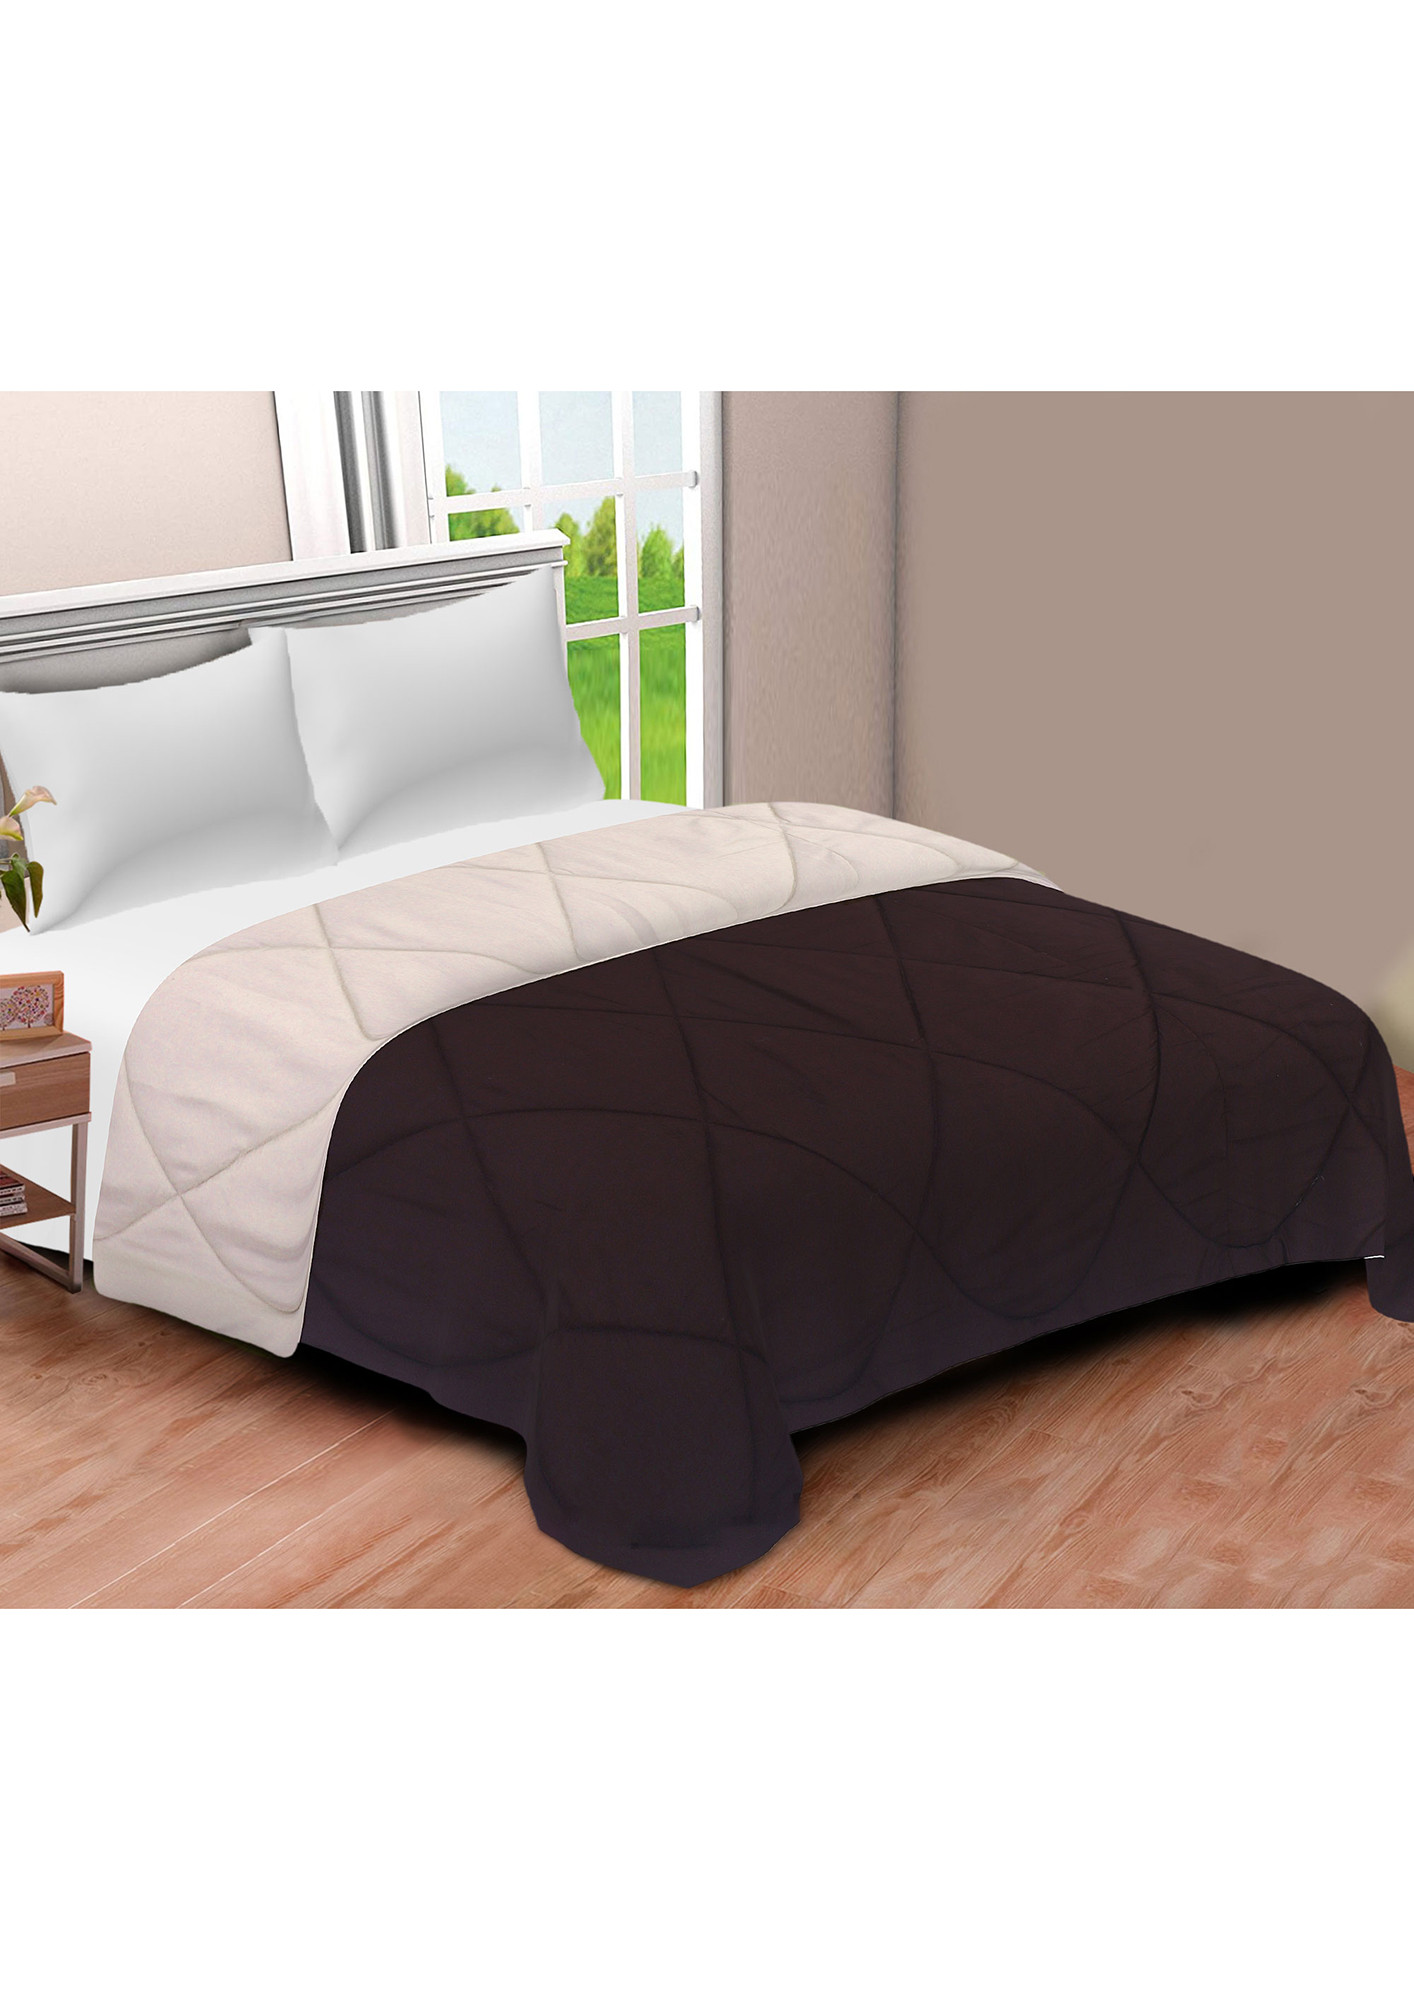 Dark Brown-Off White Double Bed Comforter